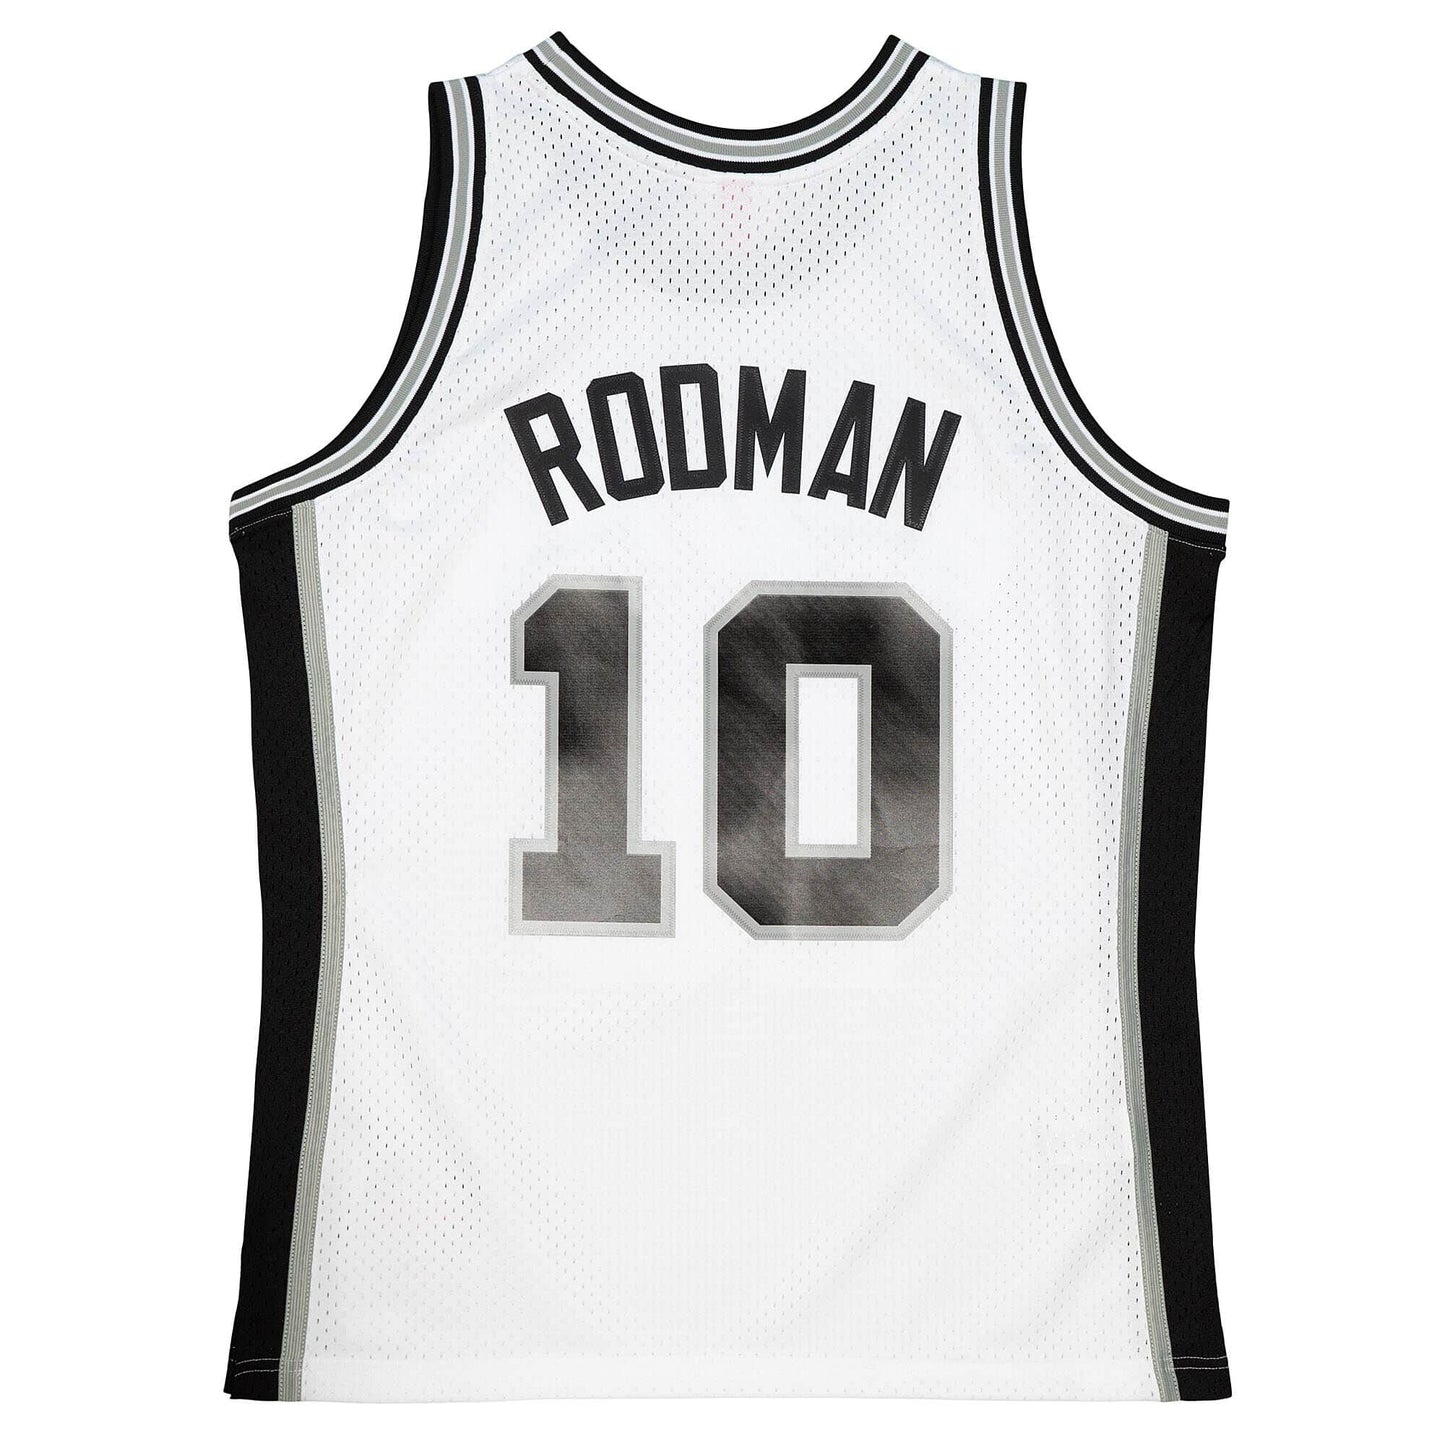 NBA Swingman Jersey San Antonio Spurs 1993-94 Dennis Rodman